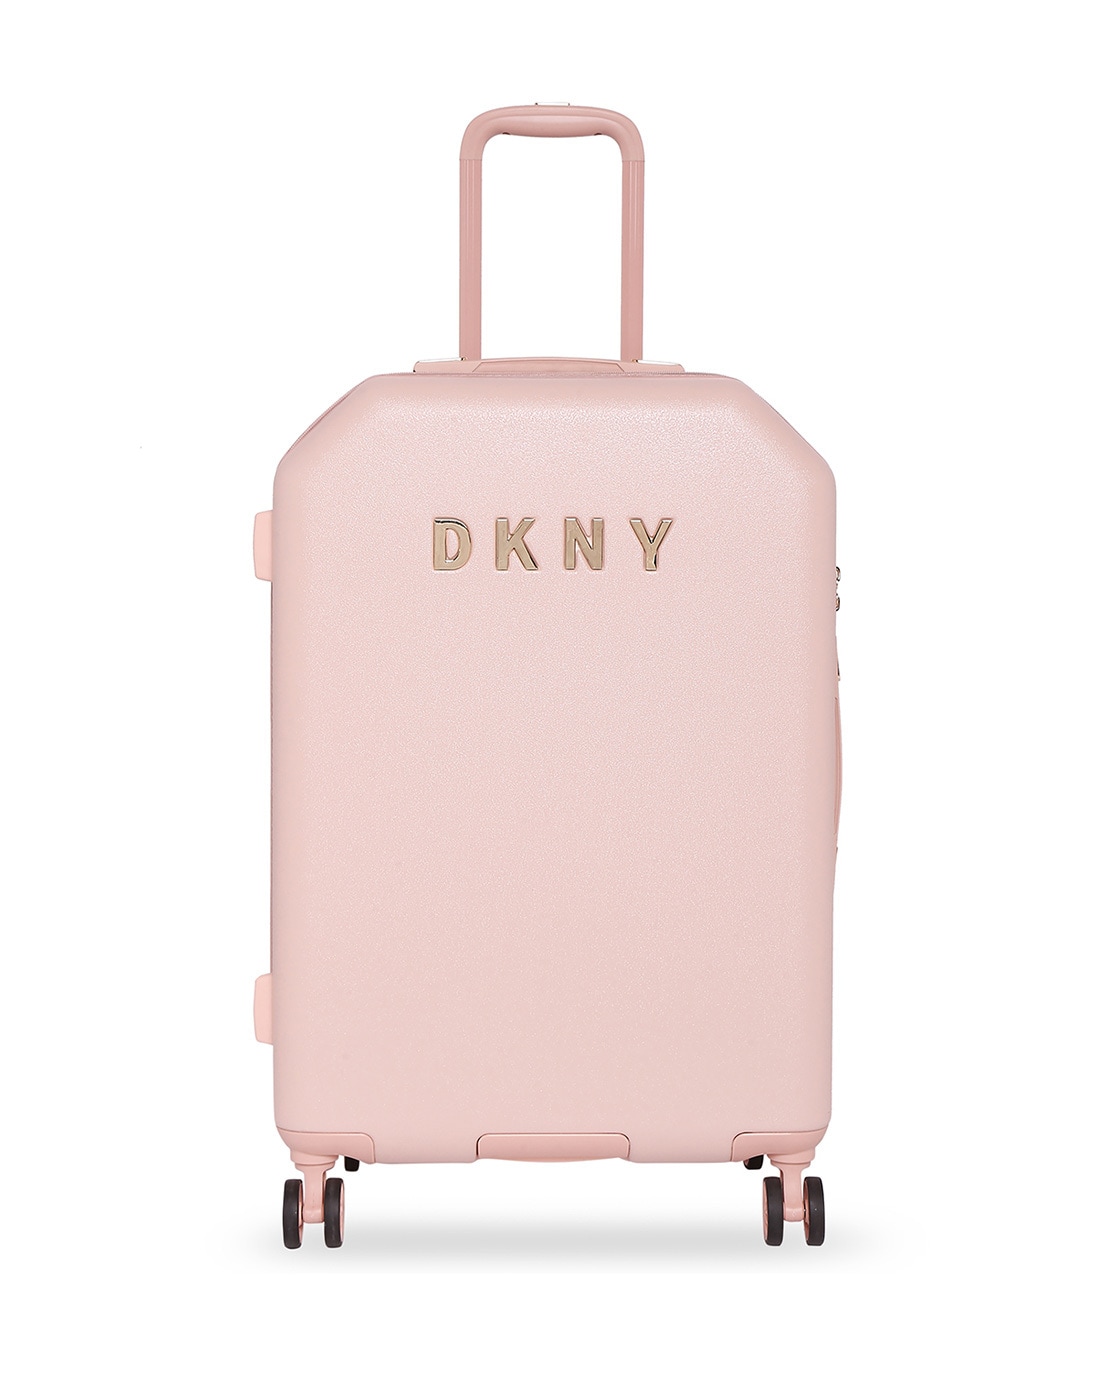 DKNY Trolley Bag M ML7-DH418-Allore / Metal Logo Collection - Travel -  SHOPCIN